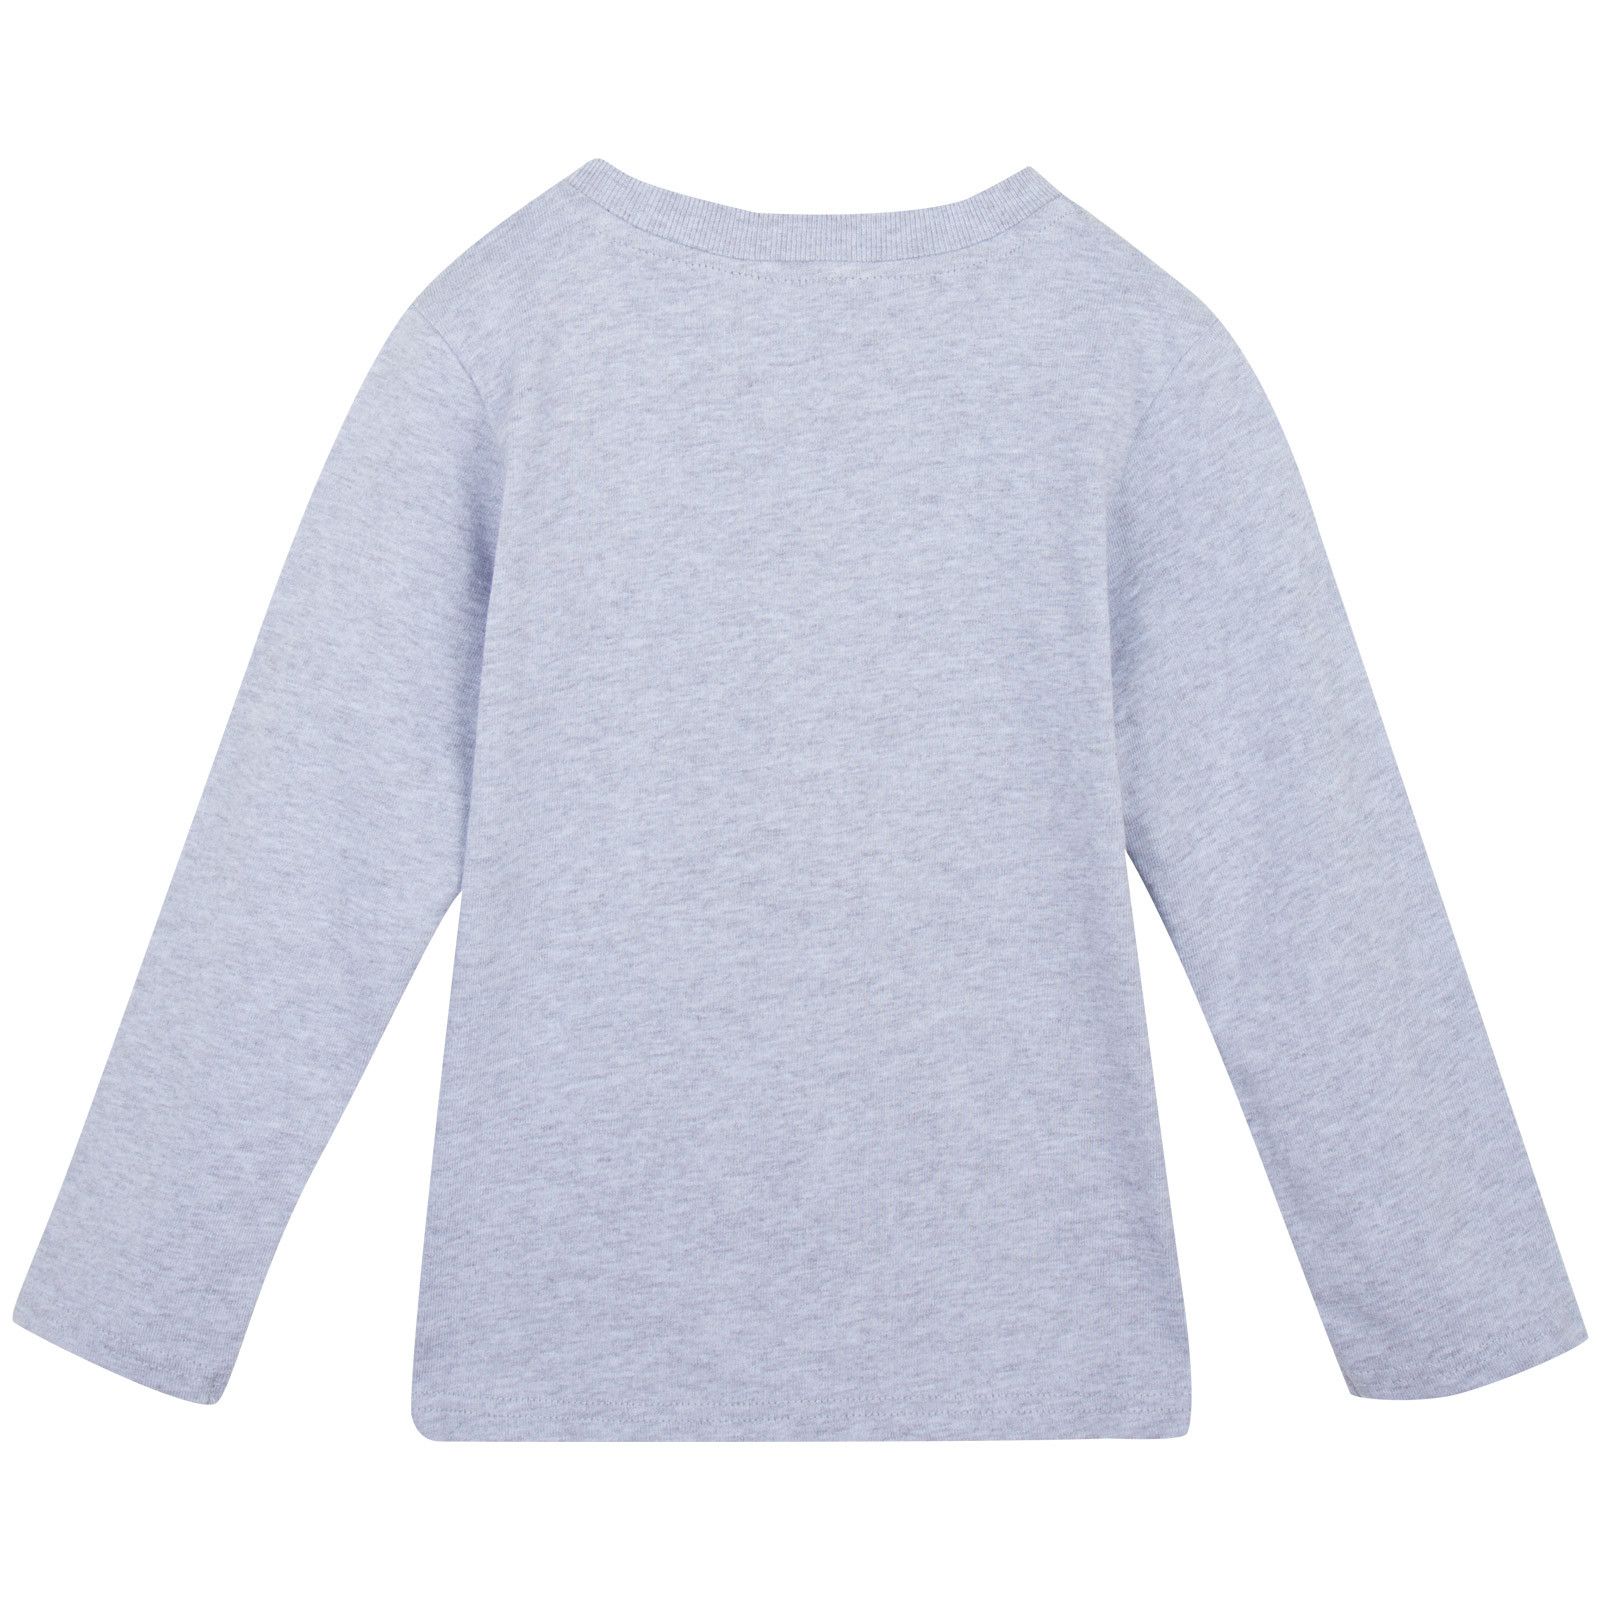 Boys Grey Tiger Embroidered Cotton Jersey T-Shirt - CÉMAROSE | Children's Fashion Store - 2